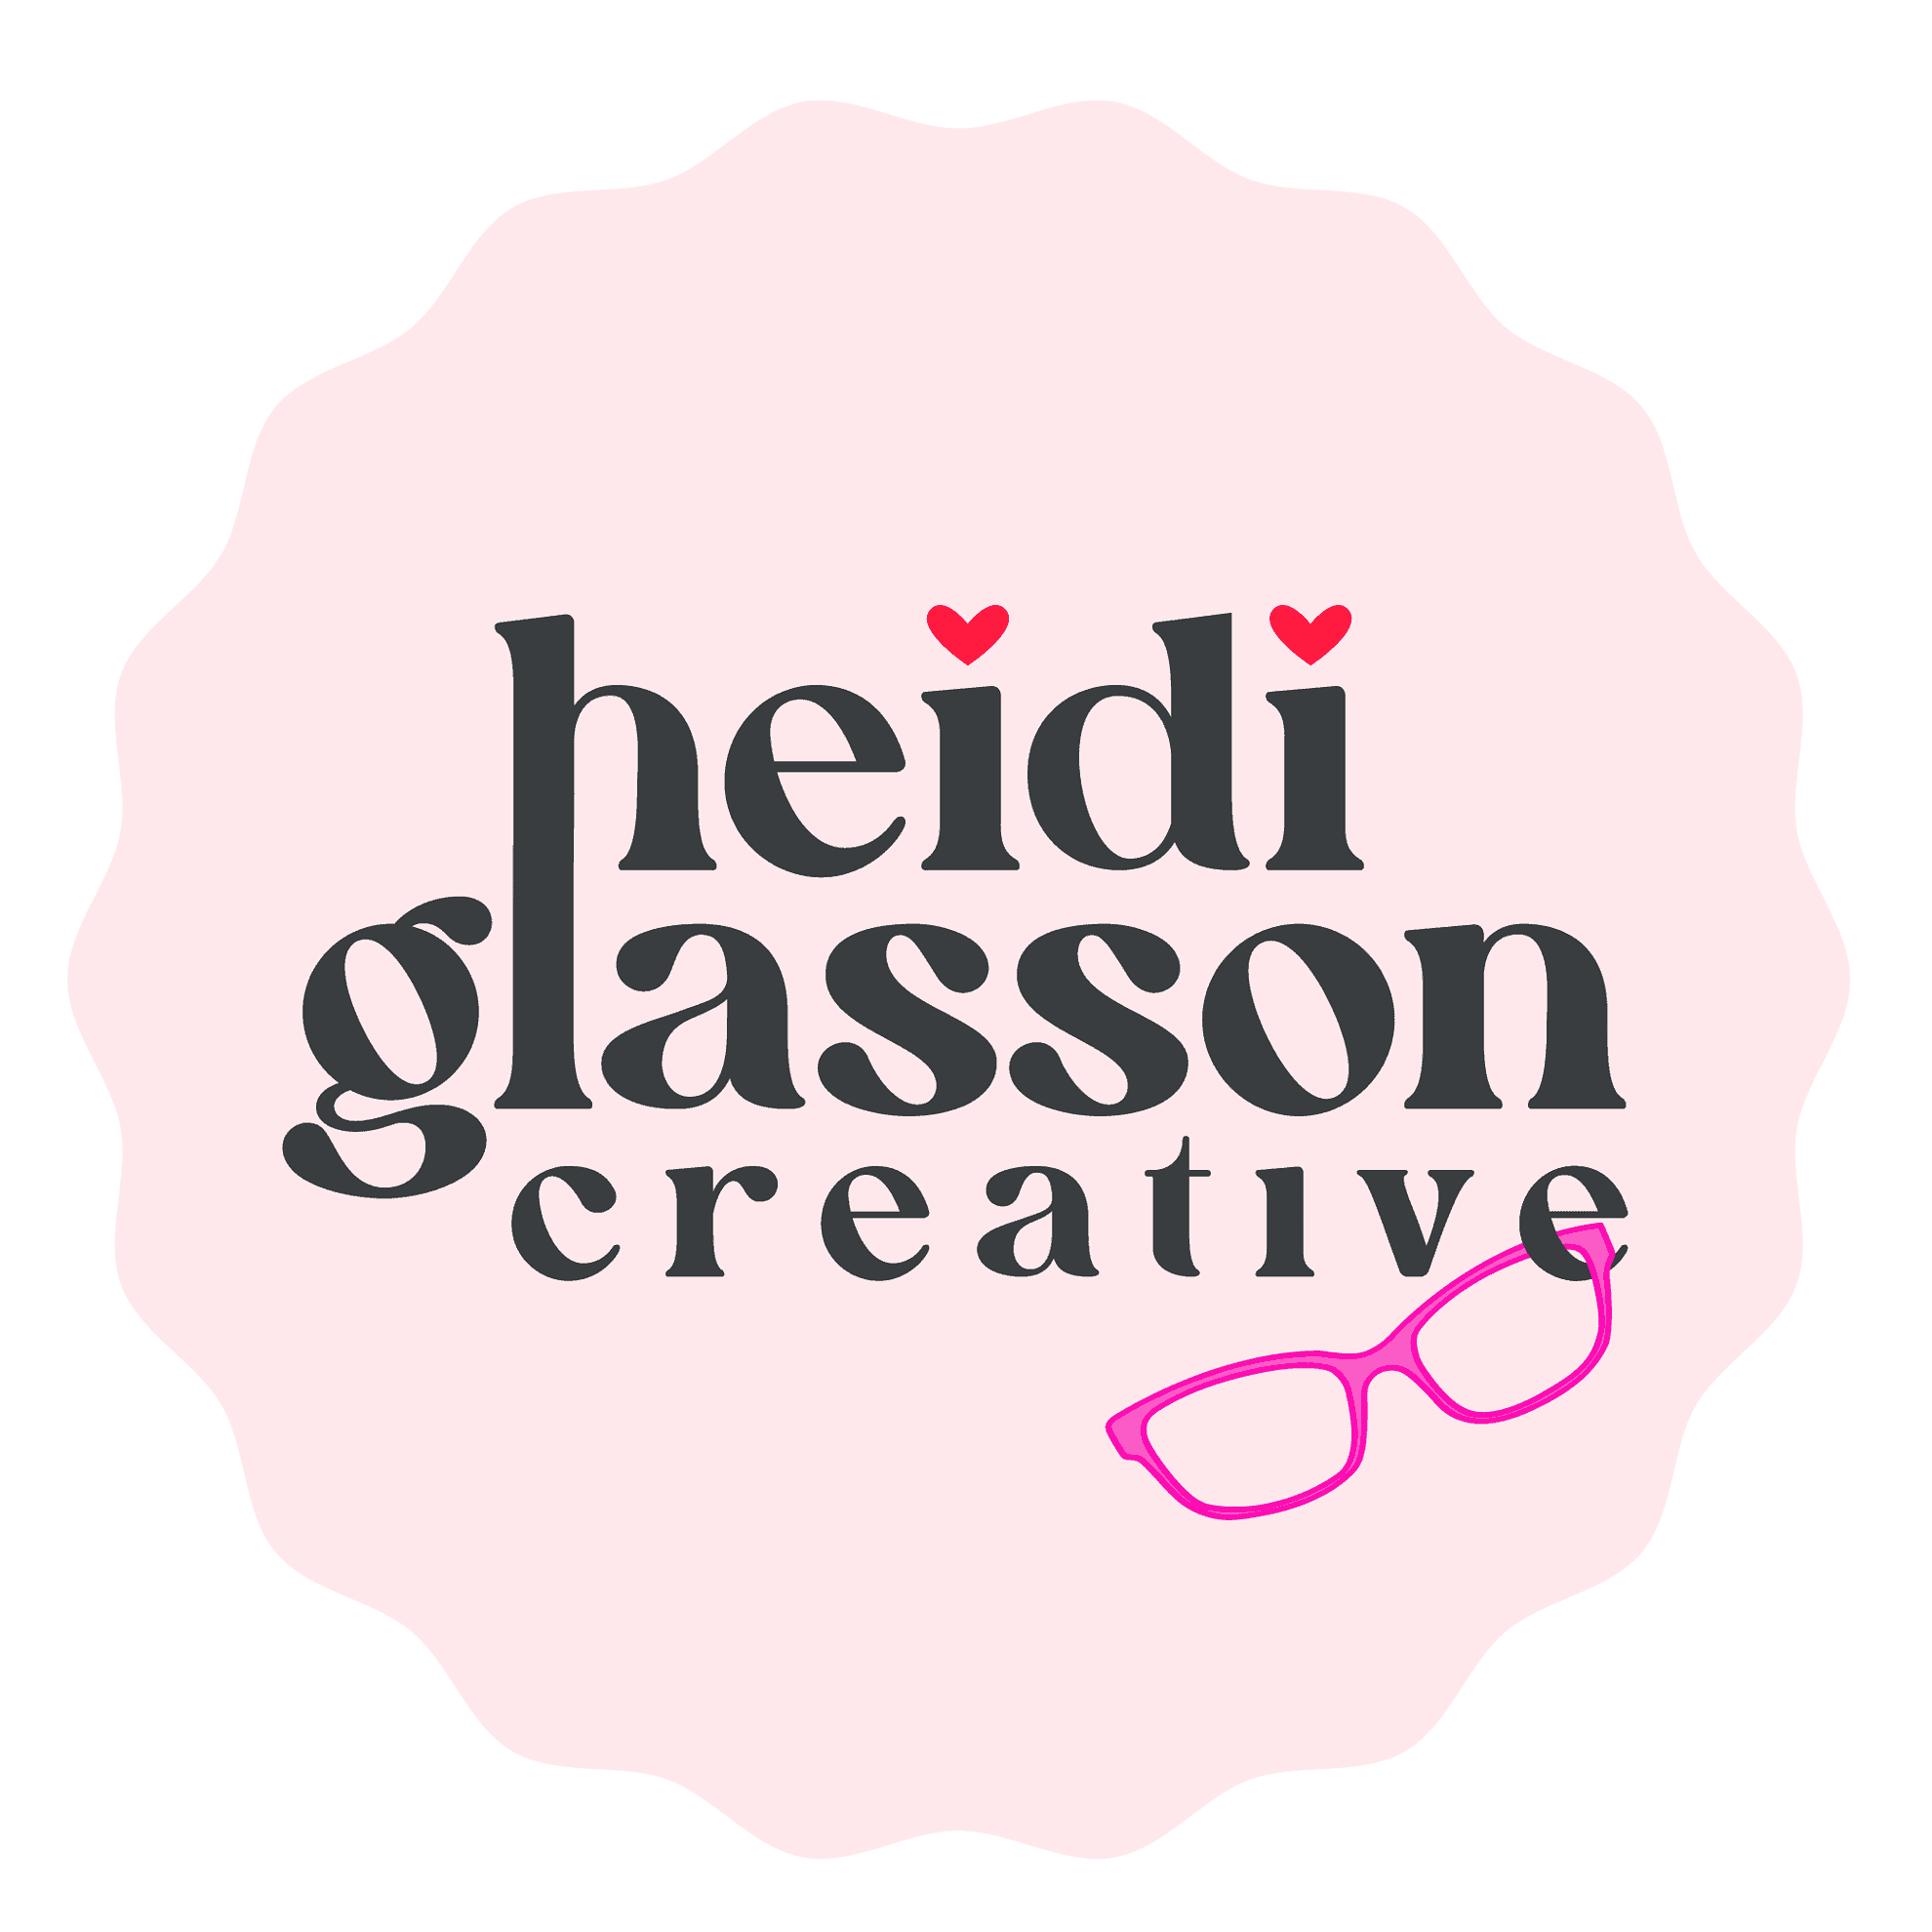 heidi glasson creative logo